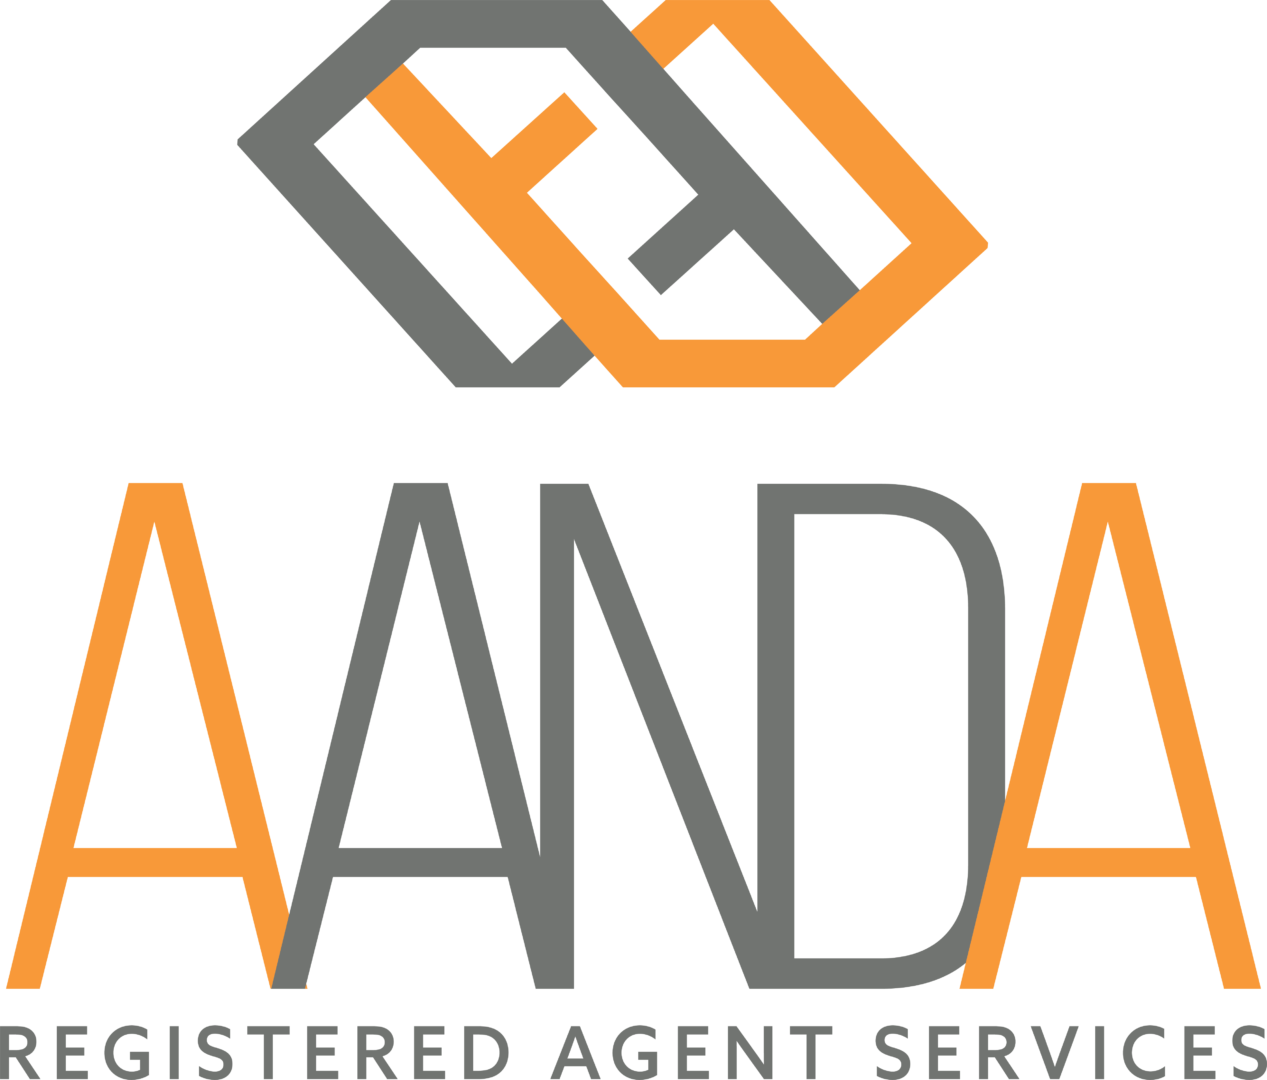 A logo of an agent service company.